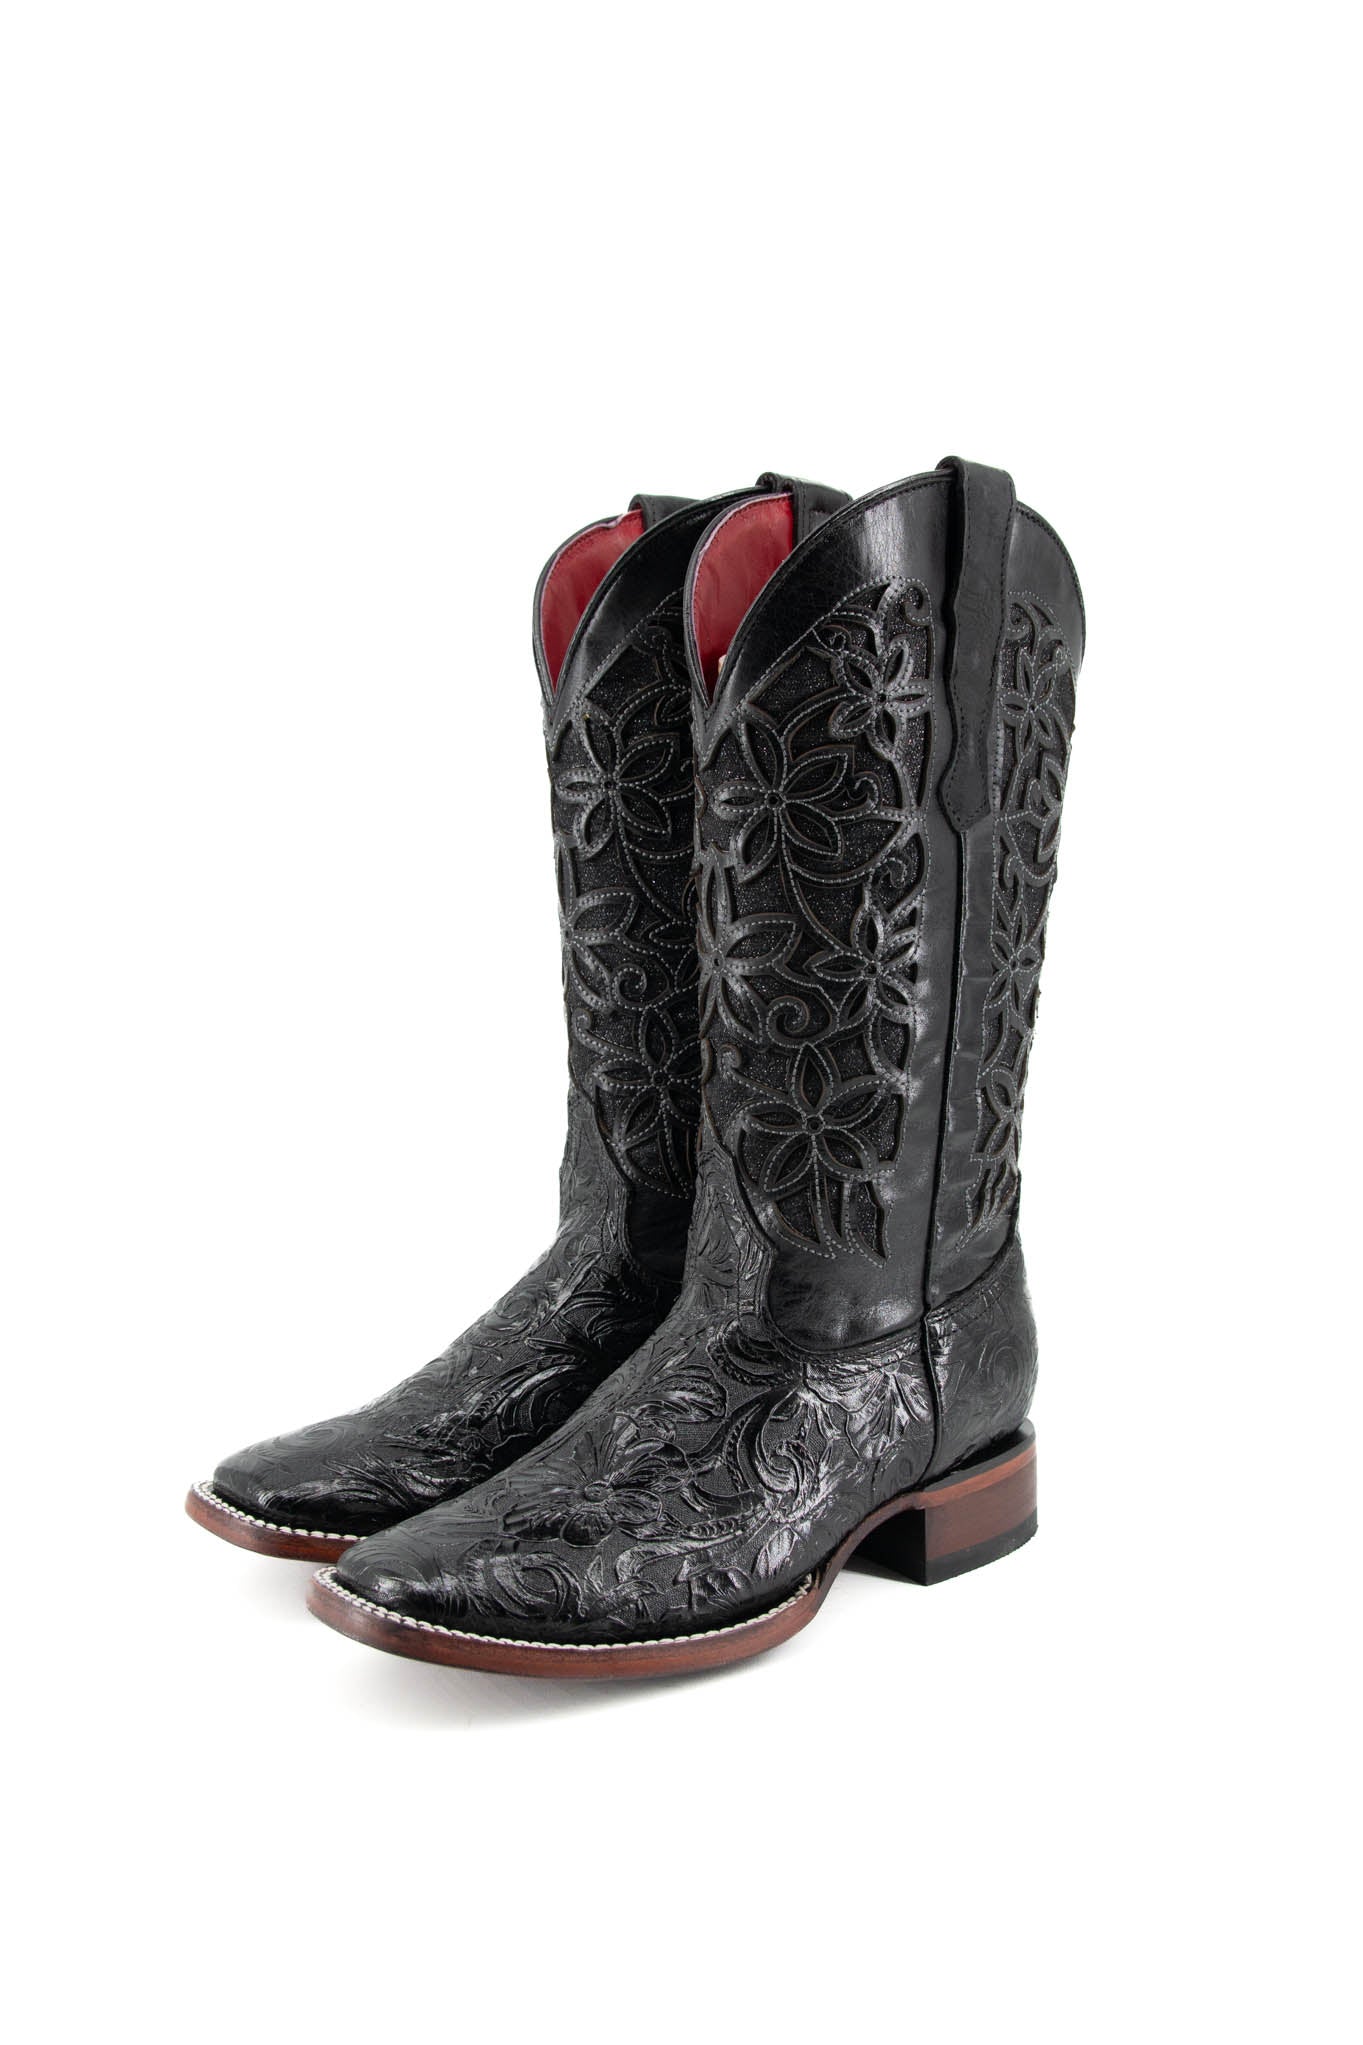 465 - Flor de Luz Cincelado Cowgirl Boot